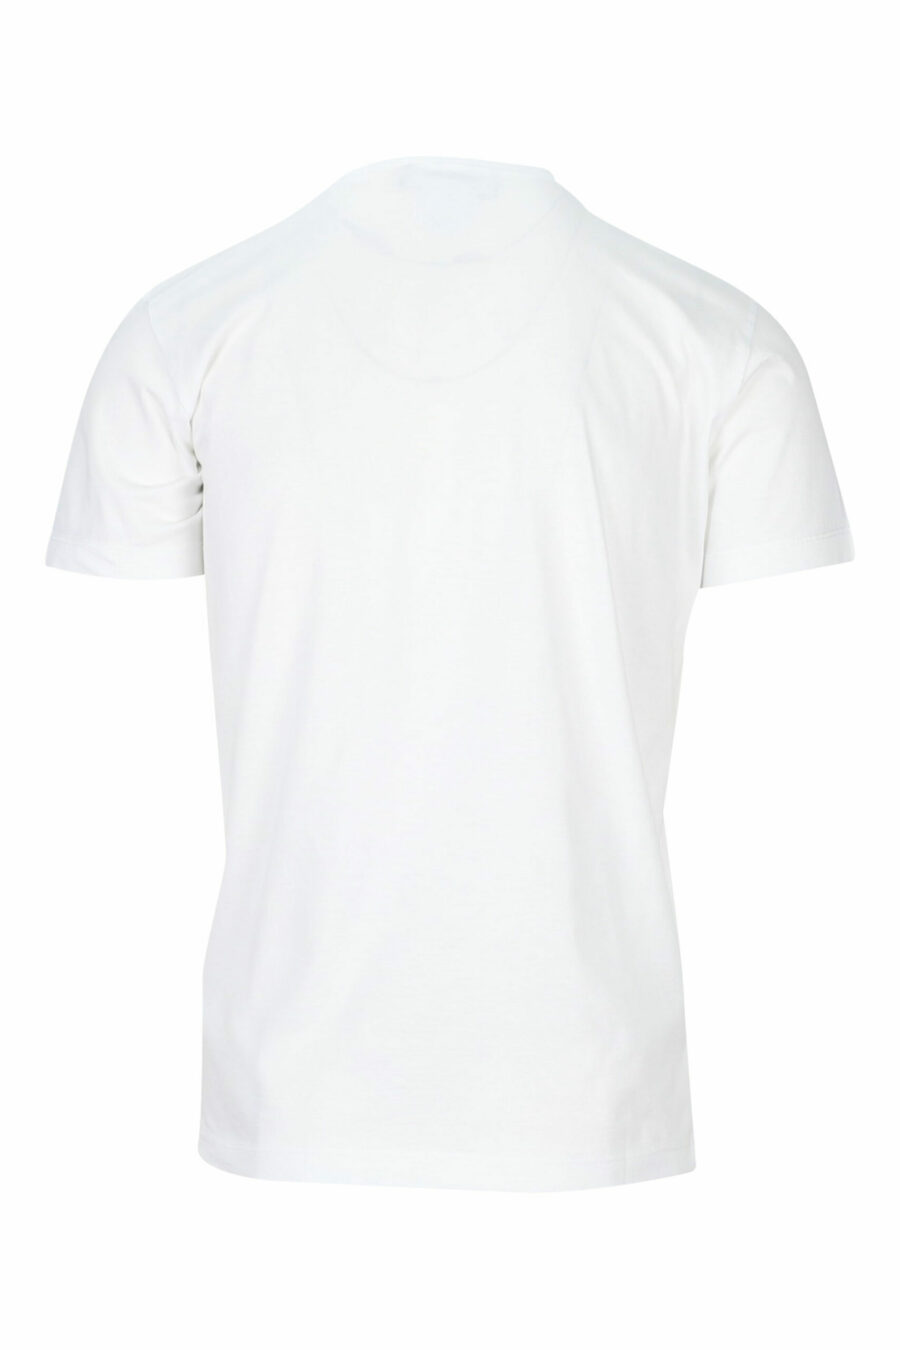 Camiseta blanca con maxilogo blanco con azul y escudo - 8054148159665 1 scaled